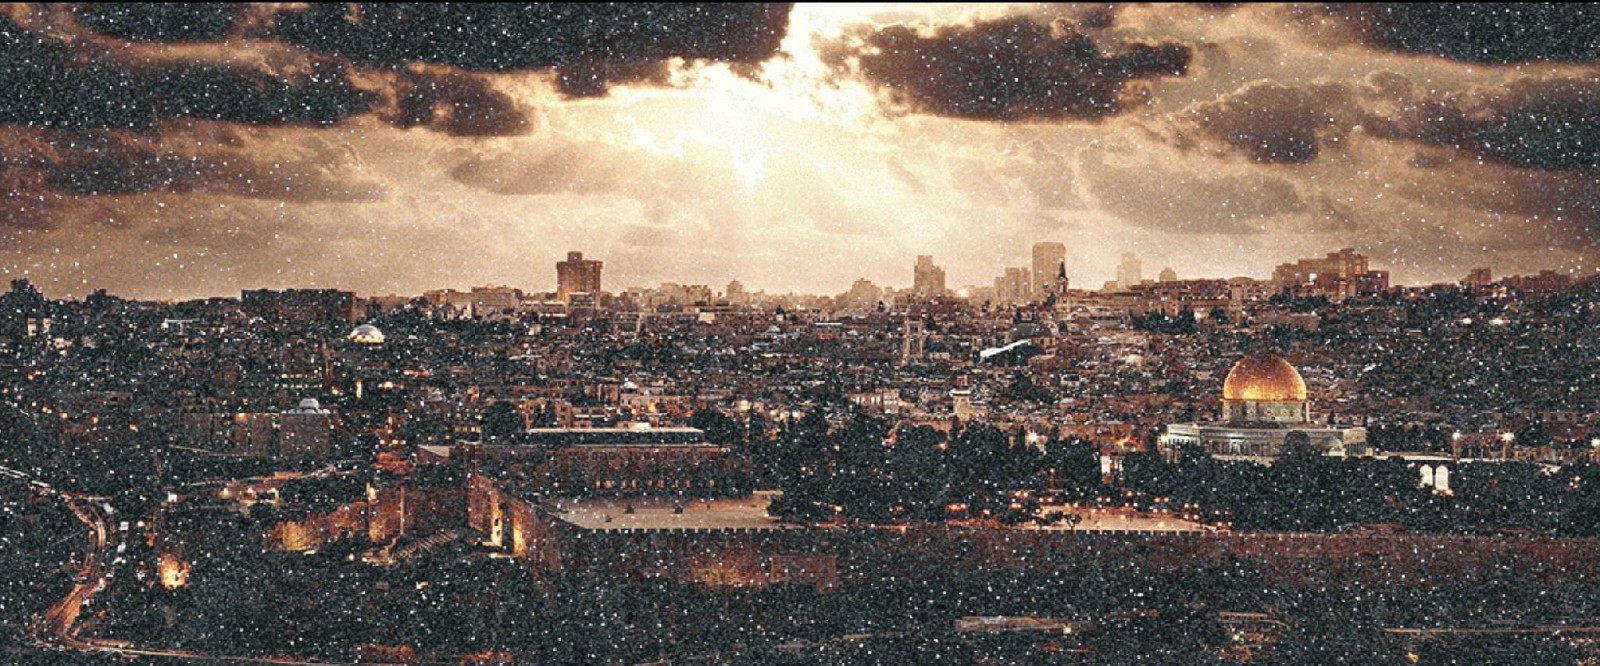 David Drebin, Jerusalem, 2021
Digital C Print with Diamond Dust, 35 x 84 in.